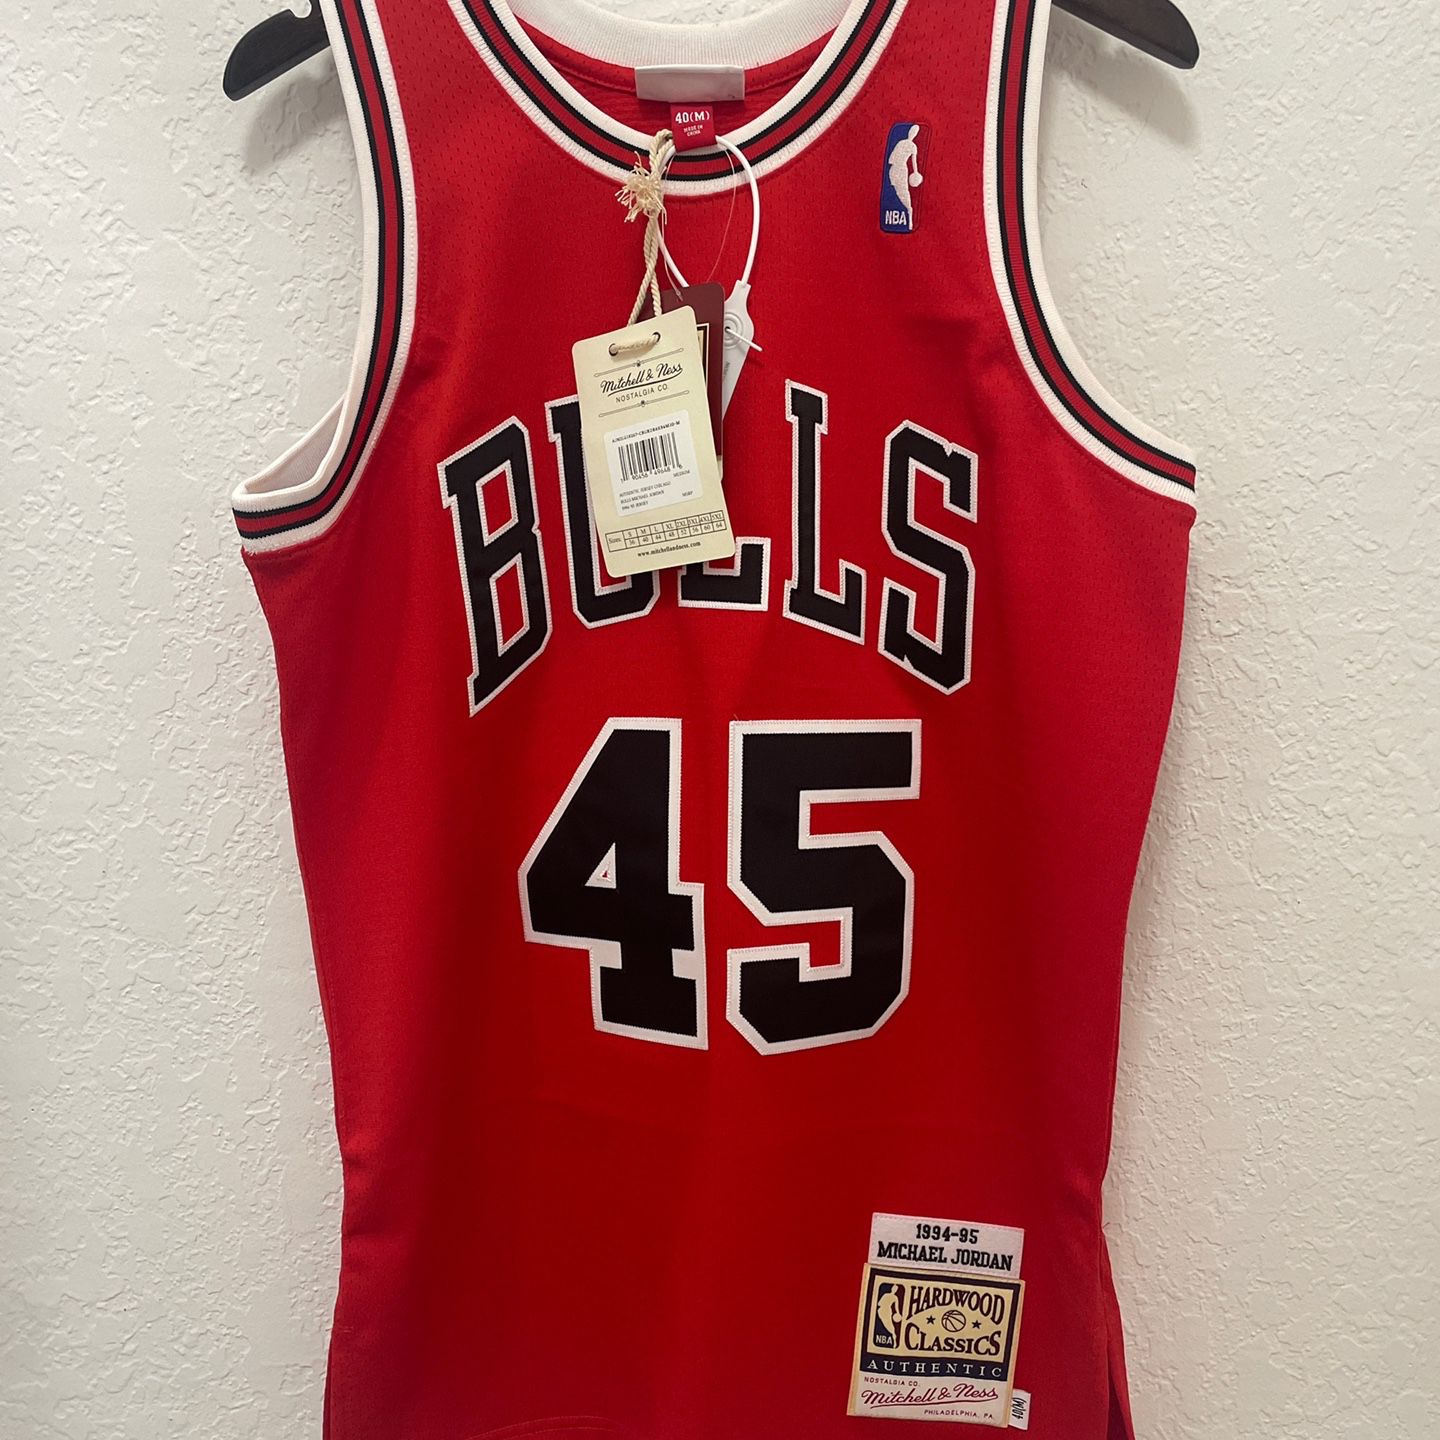 100% Authentic Michael Jordan Mitchell Ness 94 95 #45 Bulls